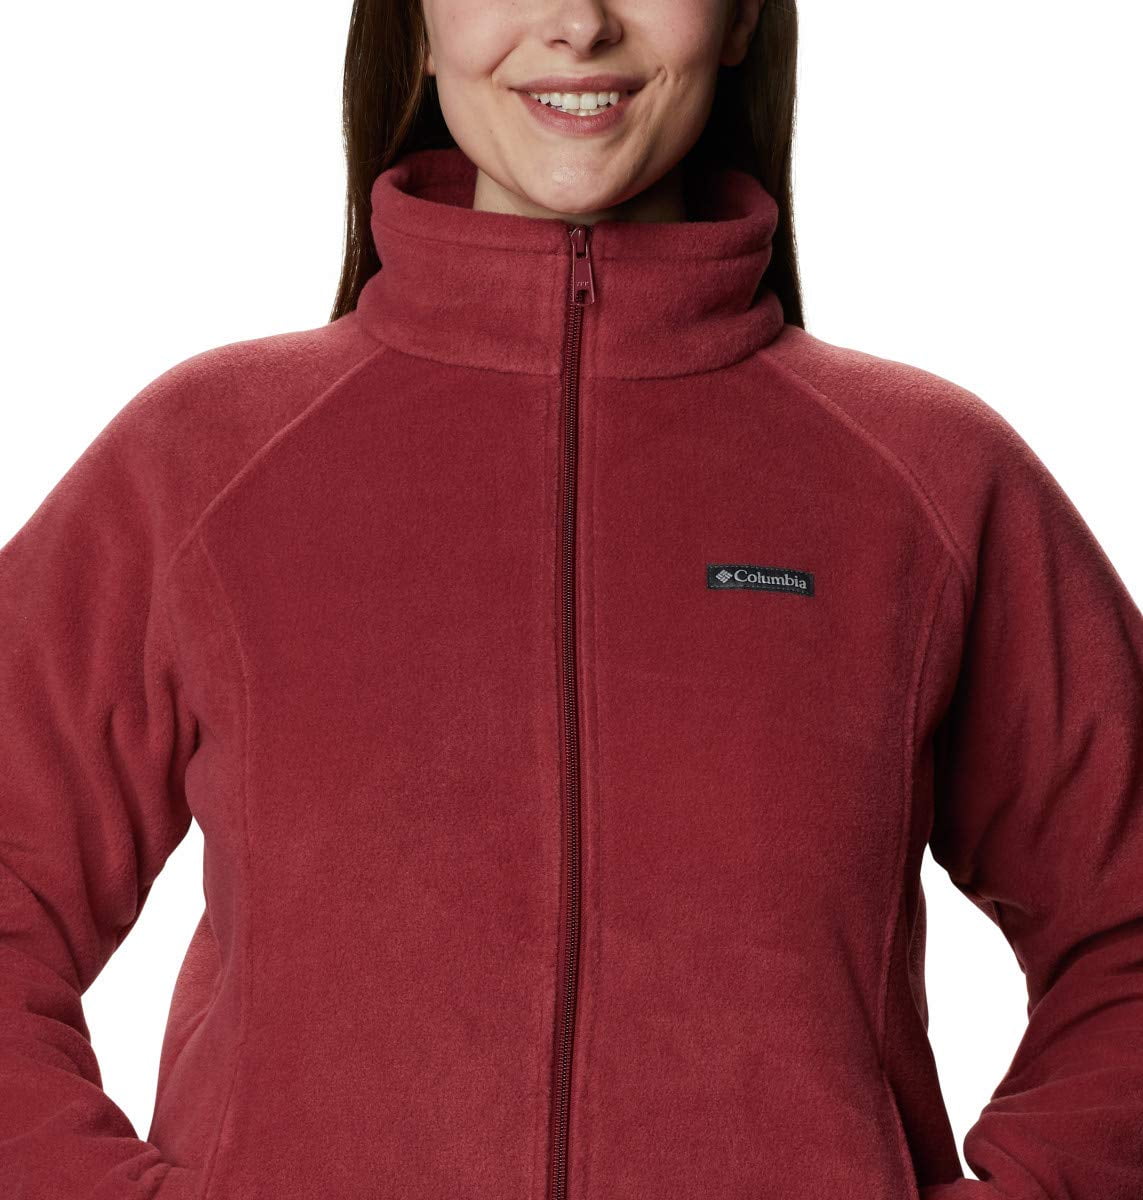 Columbia womens Benton Springs Full Zip Fleece Jacket, Marsala Red, 1X US 